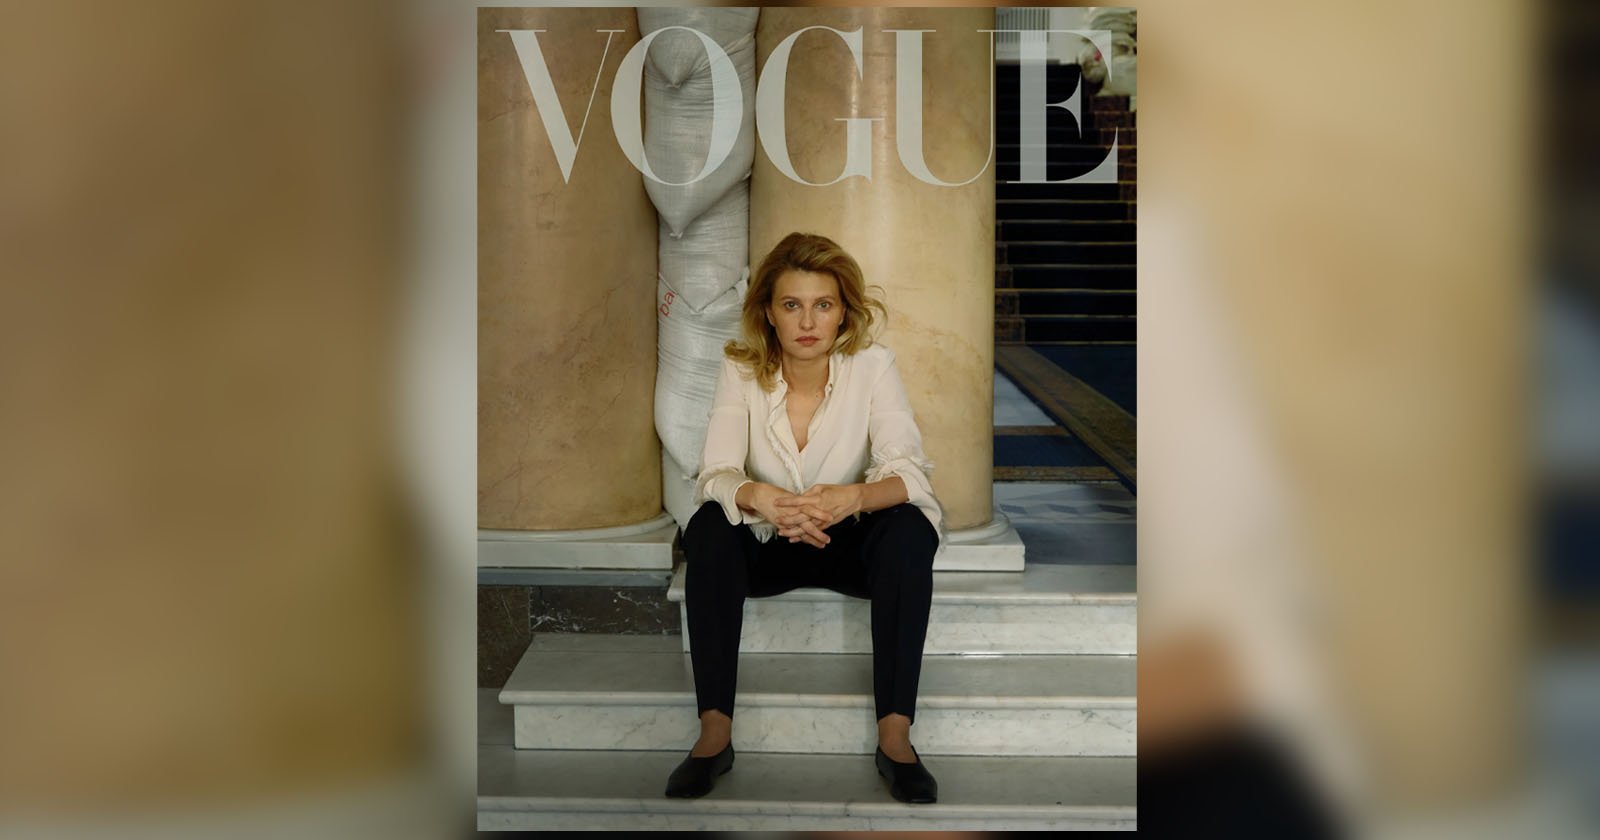 Zelenska’s Vogue Photoshoot Sparks ‘Sit Like A Girl’ Photo Trend